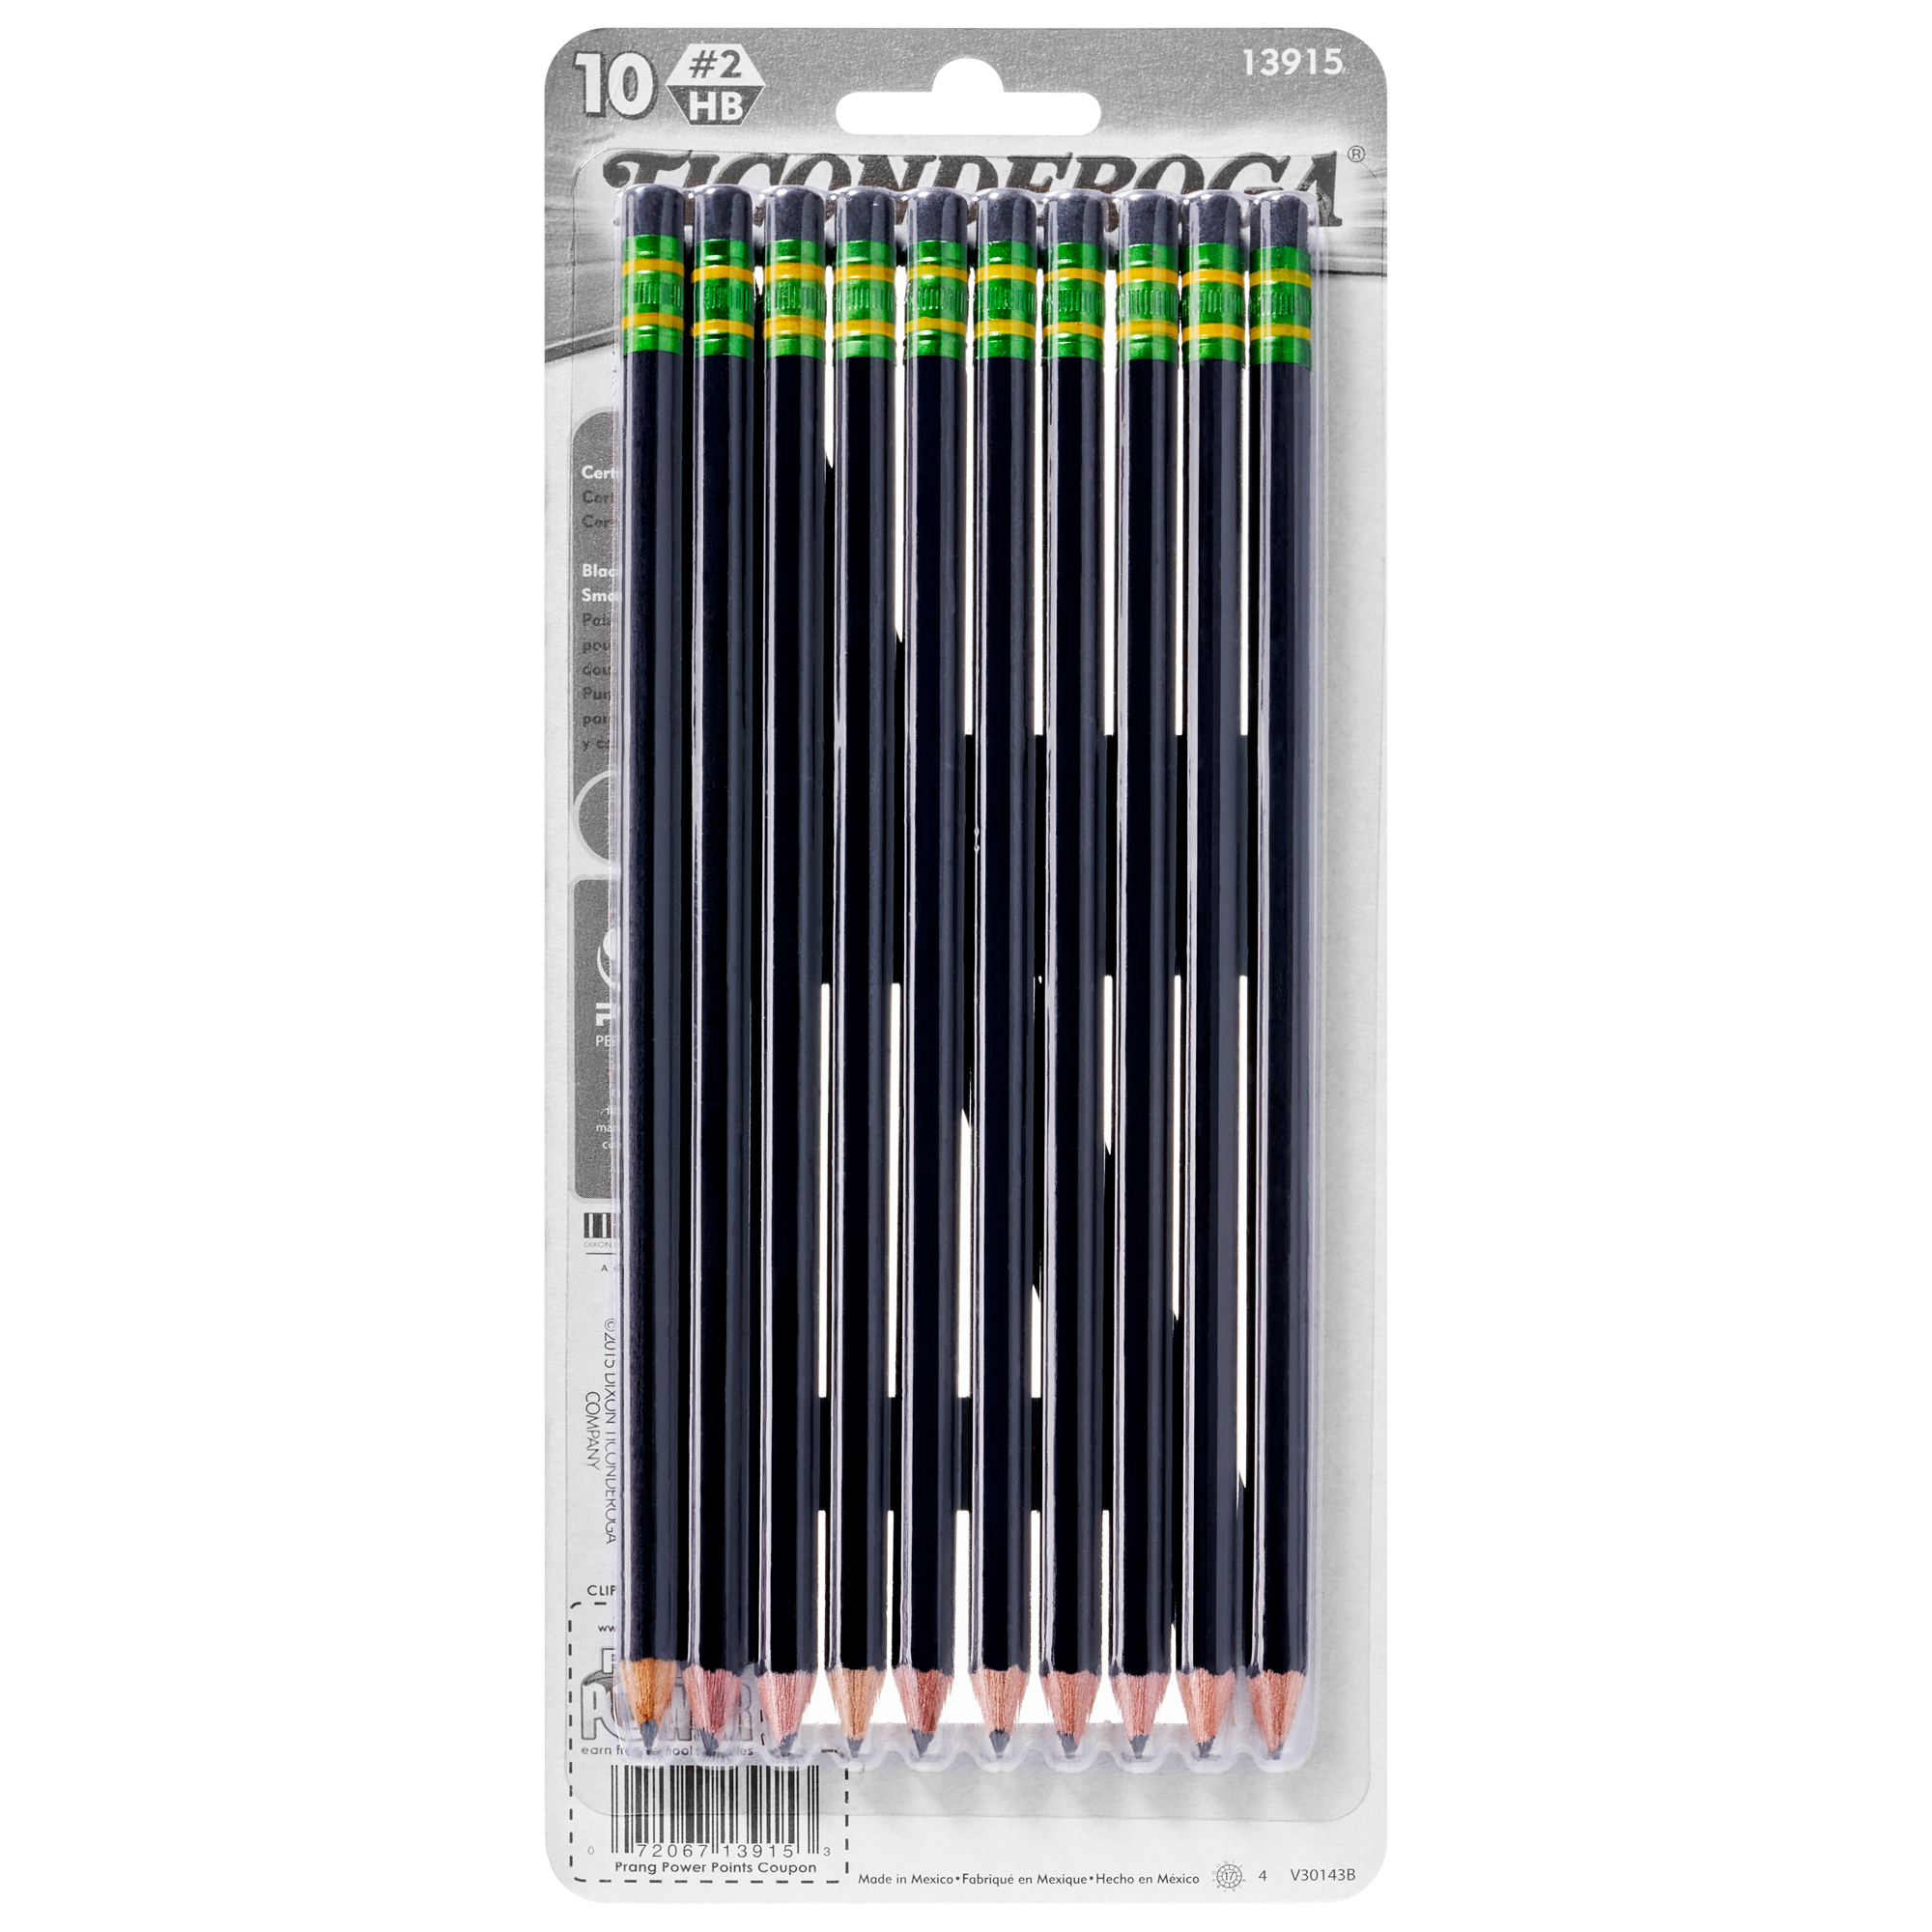 13915 10-Pack TICONDEROGA Pencils Wood-Cased Graphite #2 HB Soft Pre-Sharpened Black 